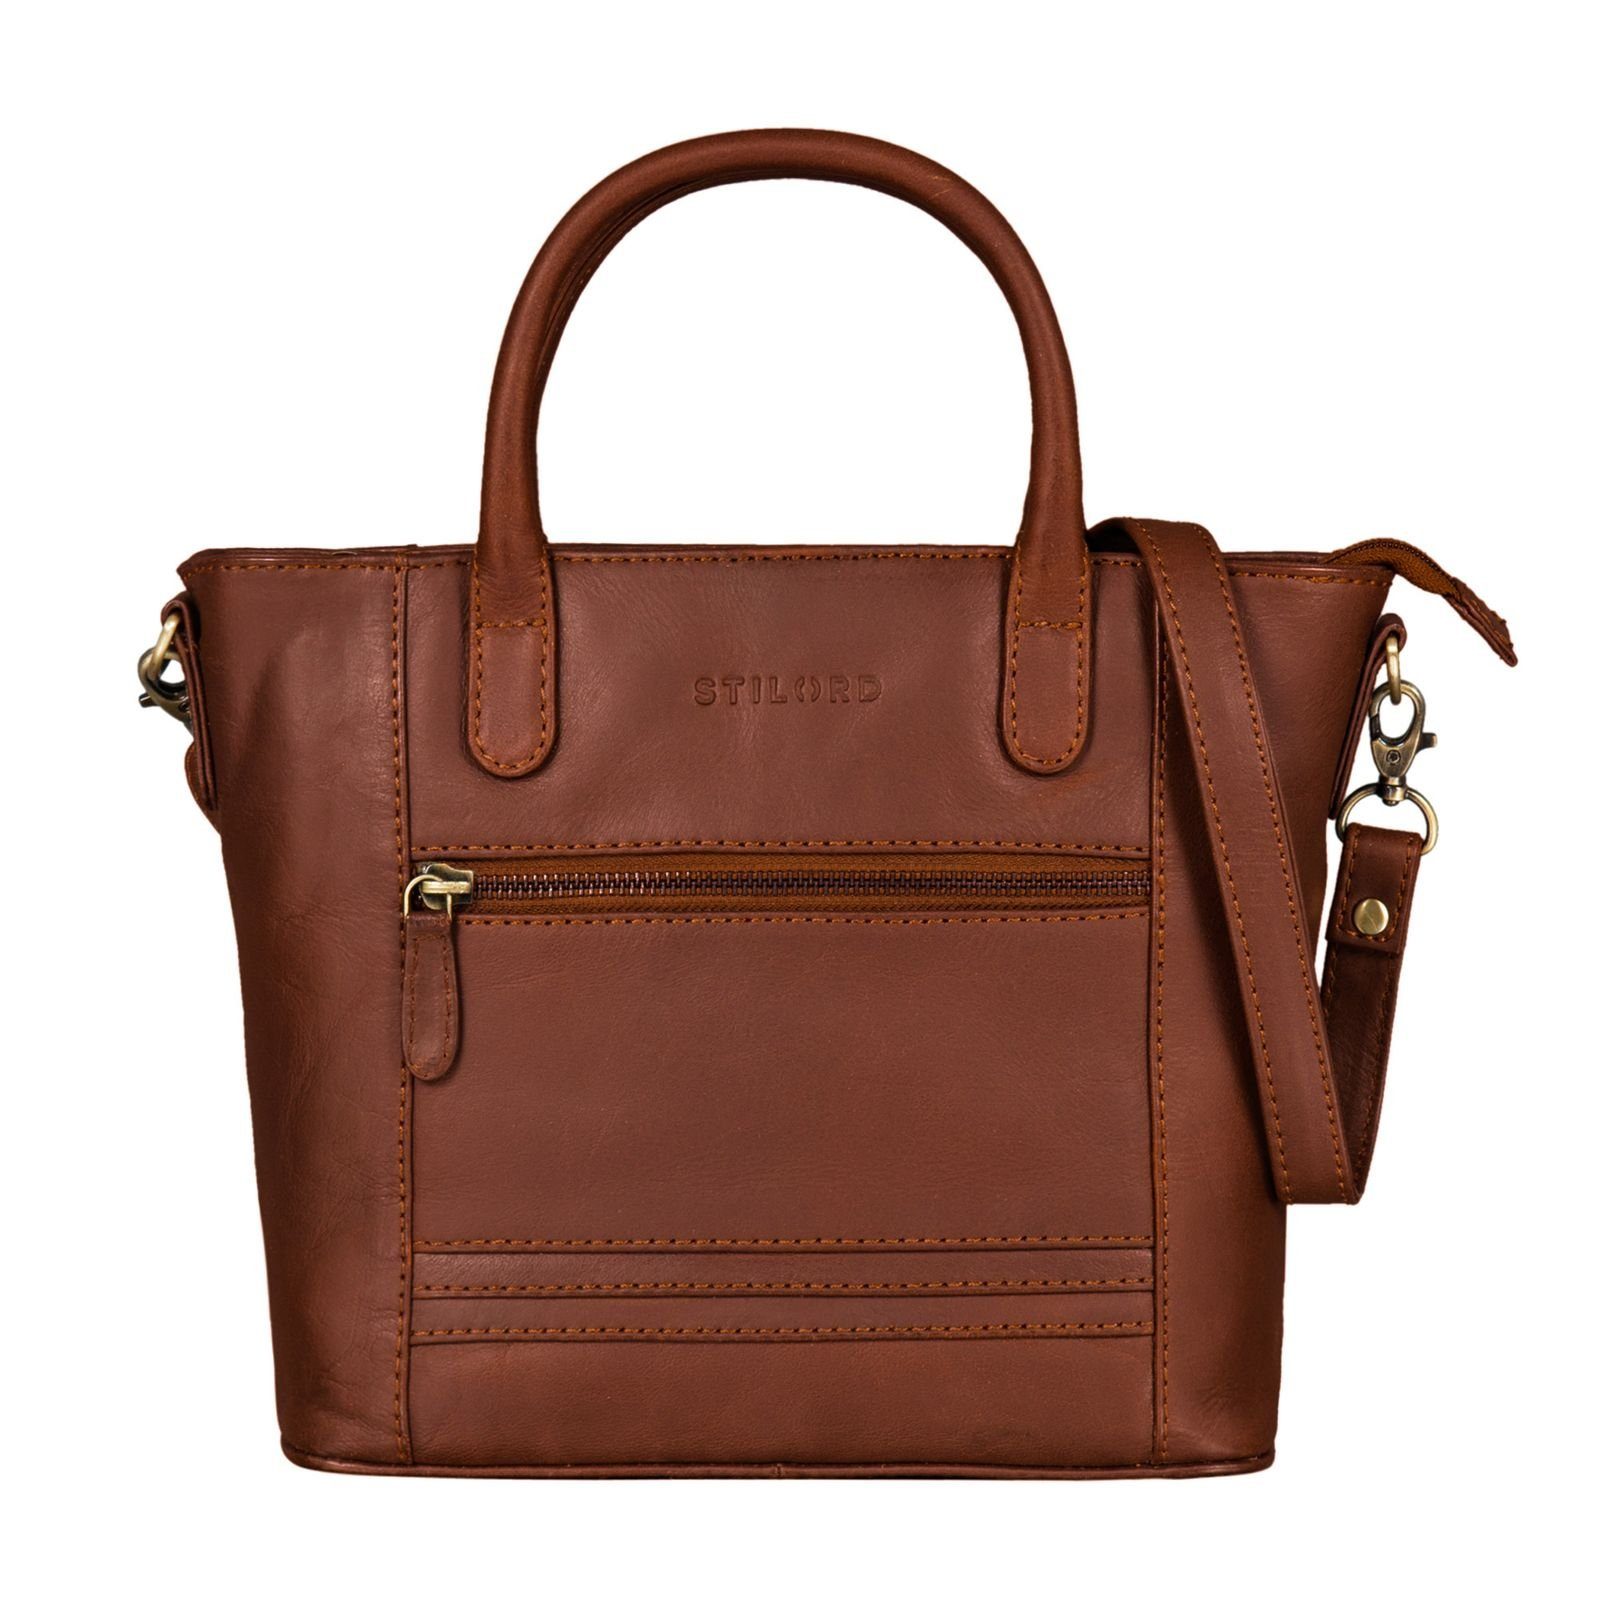 STILORD Handtasche "Meghan" Leder Handtasche Damen arona - braun | Handtaschen